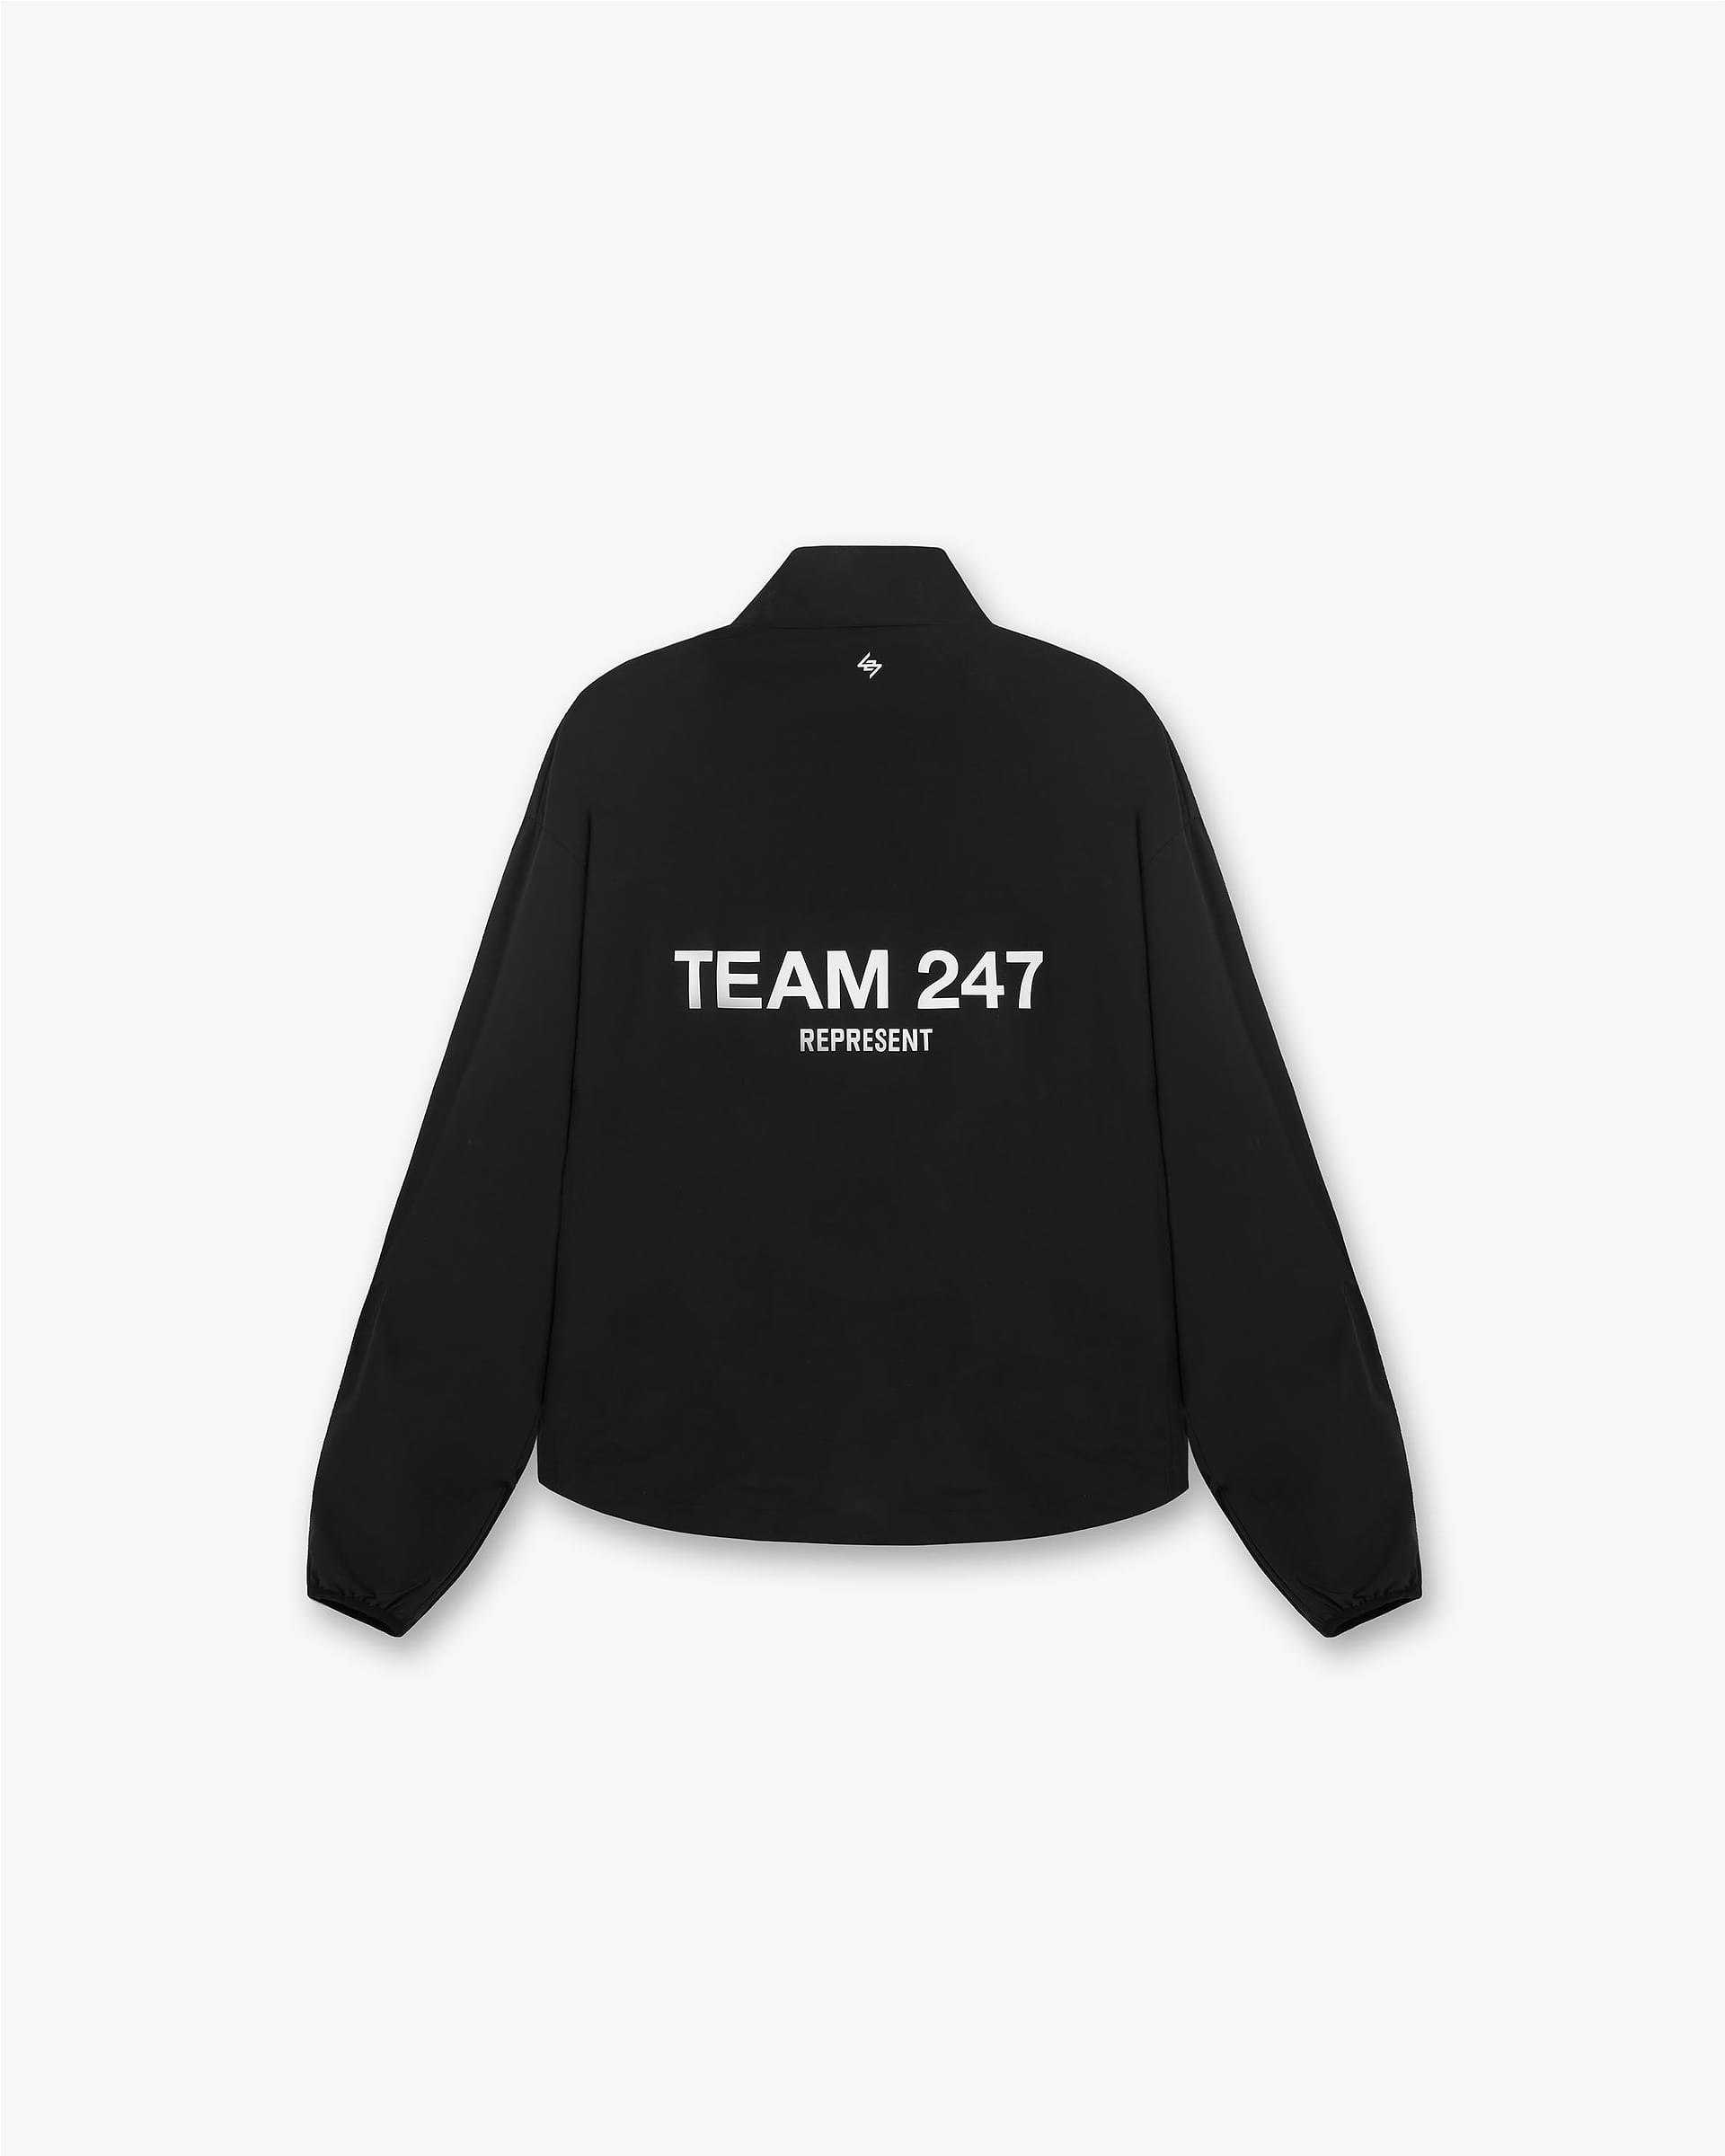 Long | 247 | Black Team T-Shirt REPRESENT Sleeve CLO